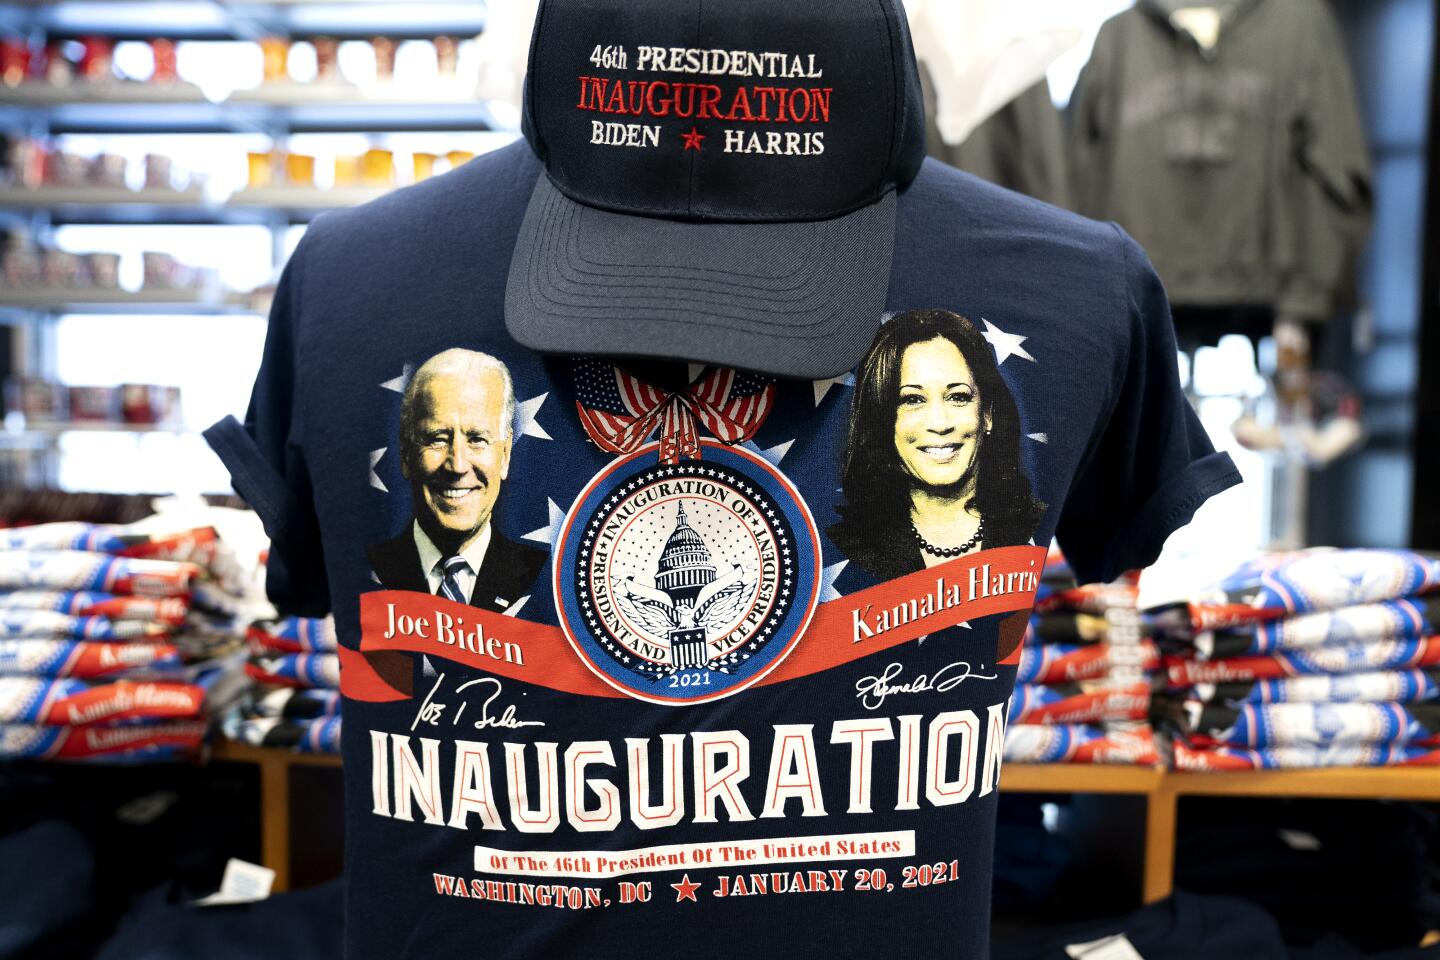 Biden-Harris Themed Merchandise On Sale Ahead Of Inauguration